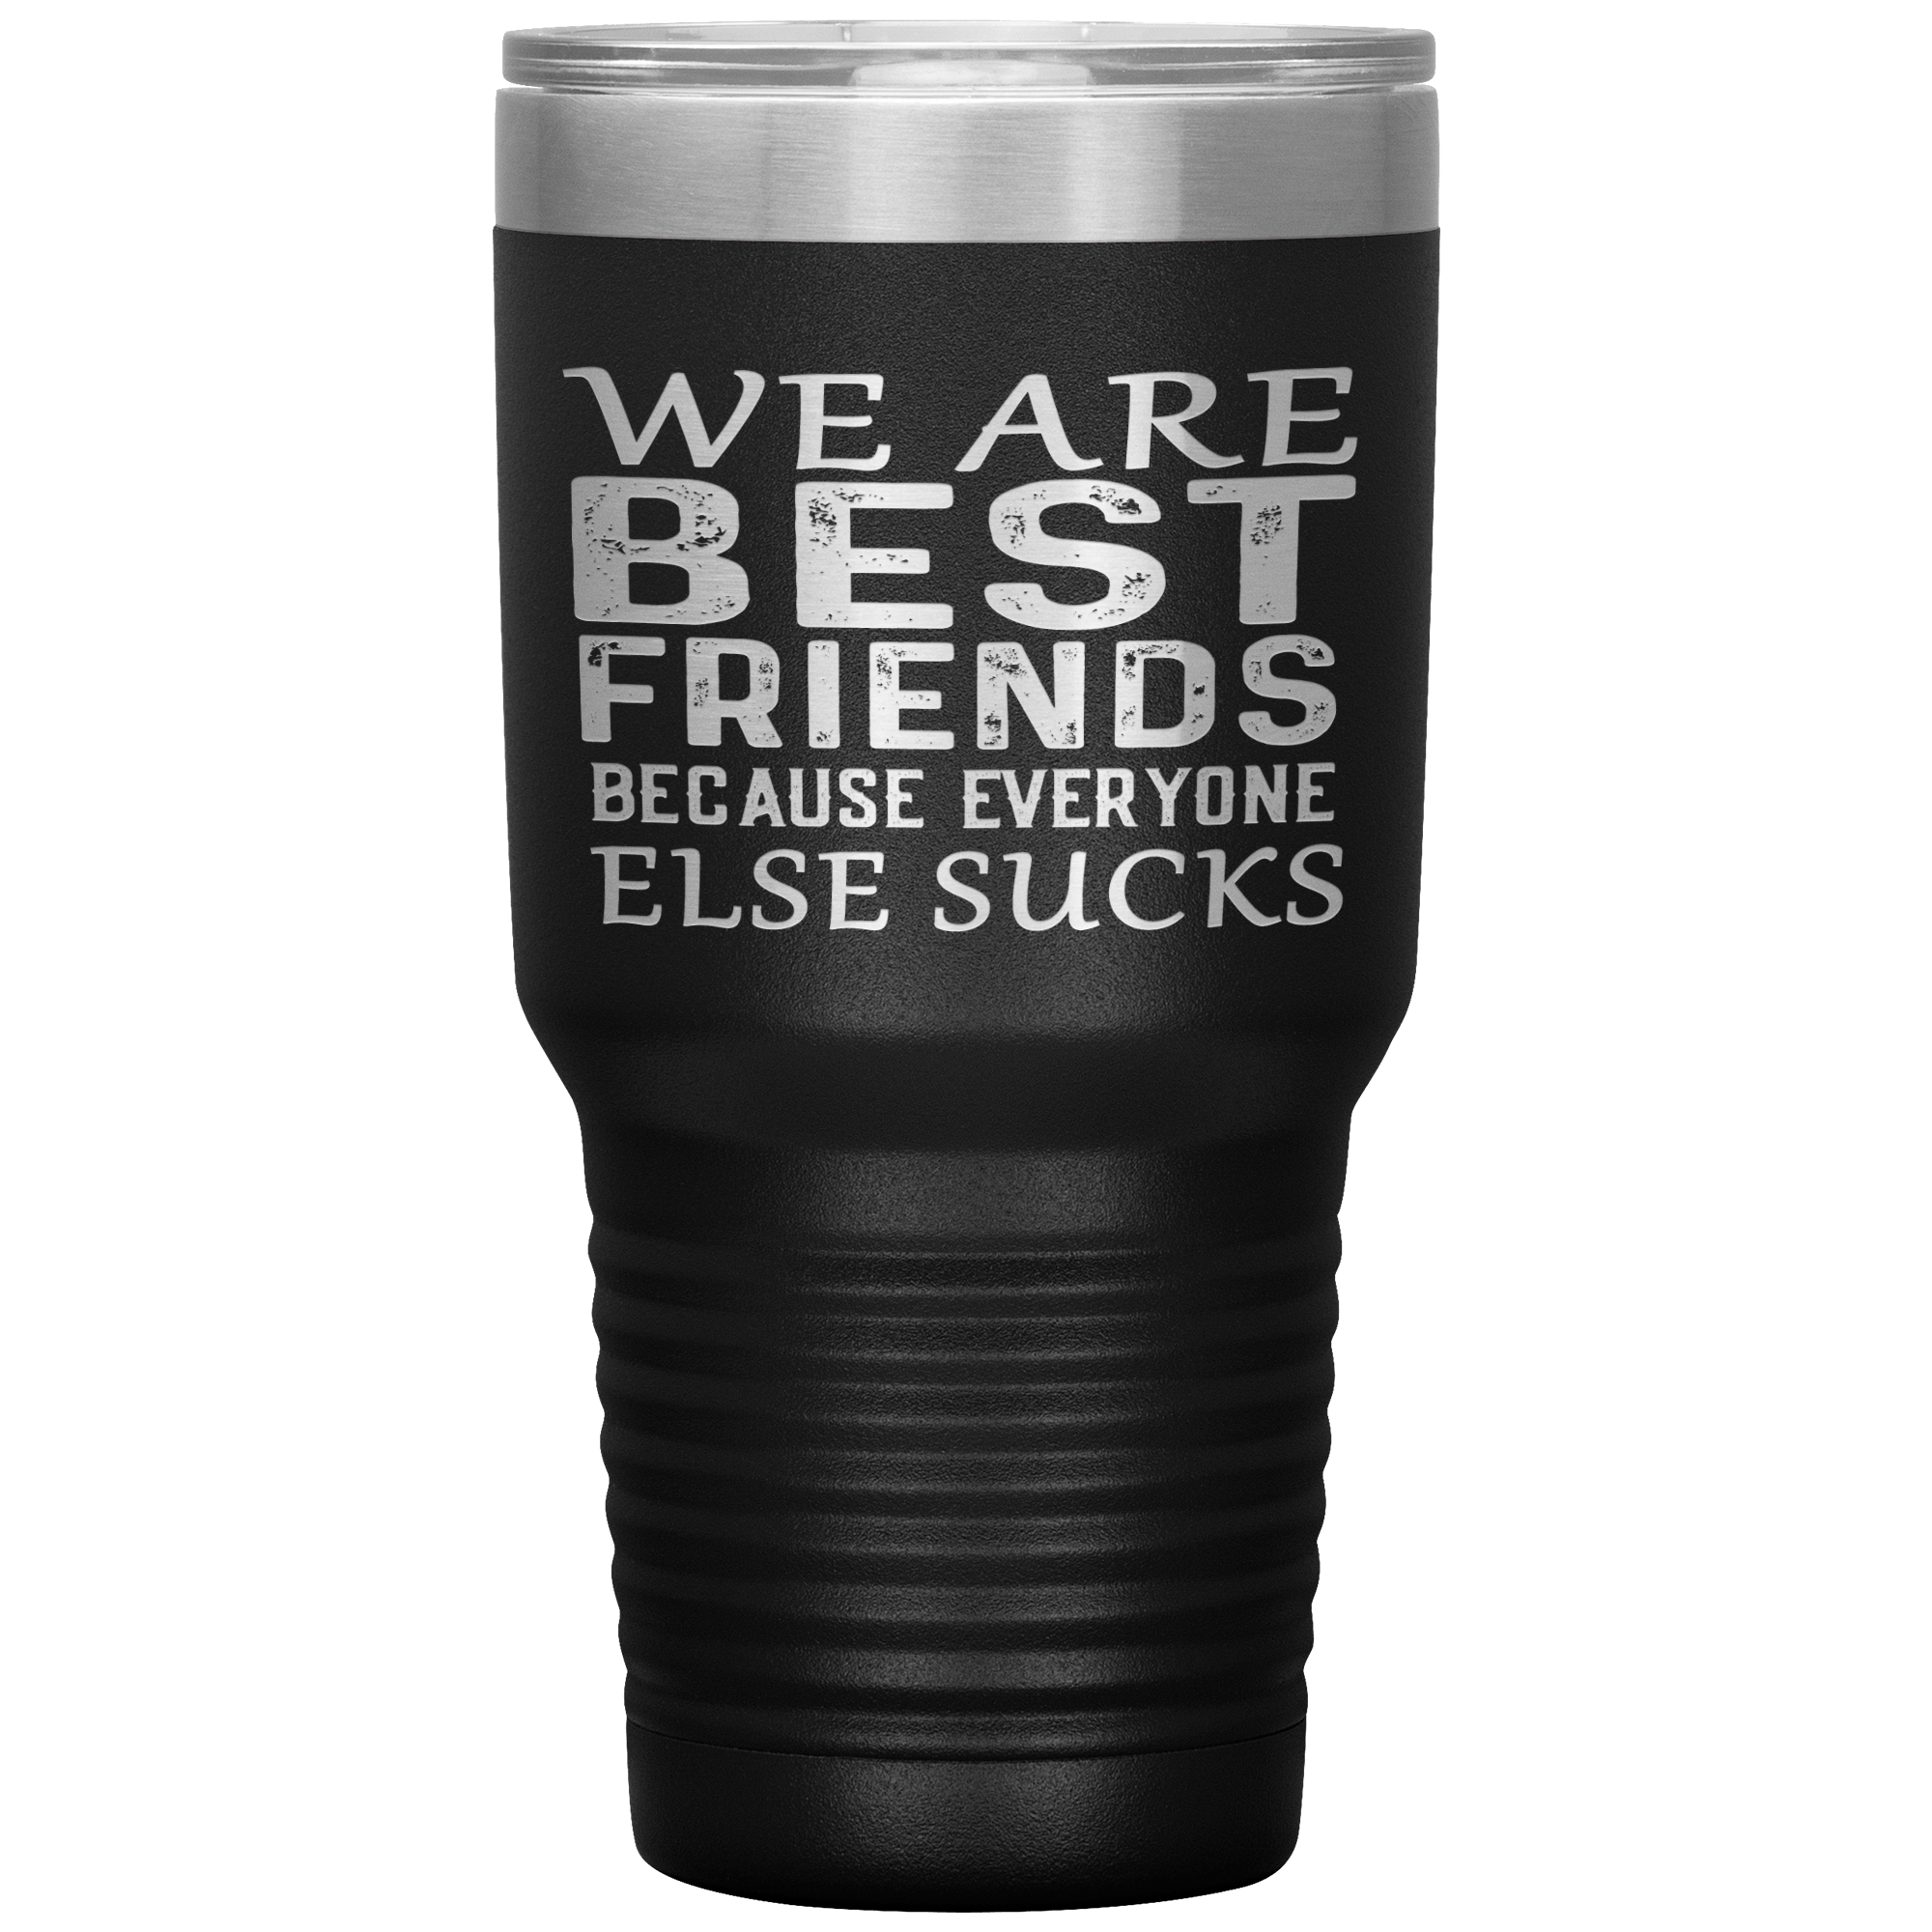 "WE ARE BEST FRIENDS BECAUSE EVERYONE ELSE SUCKS" Tumbler.